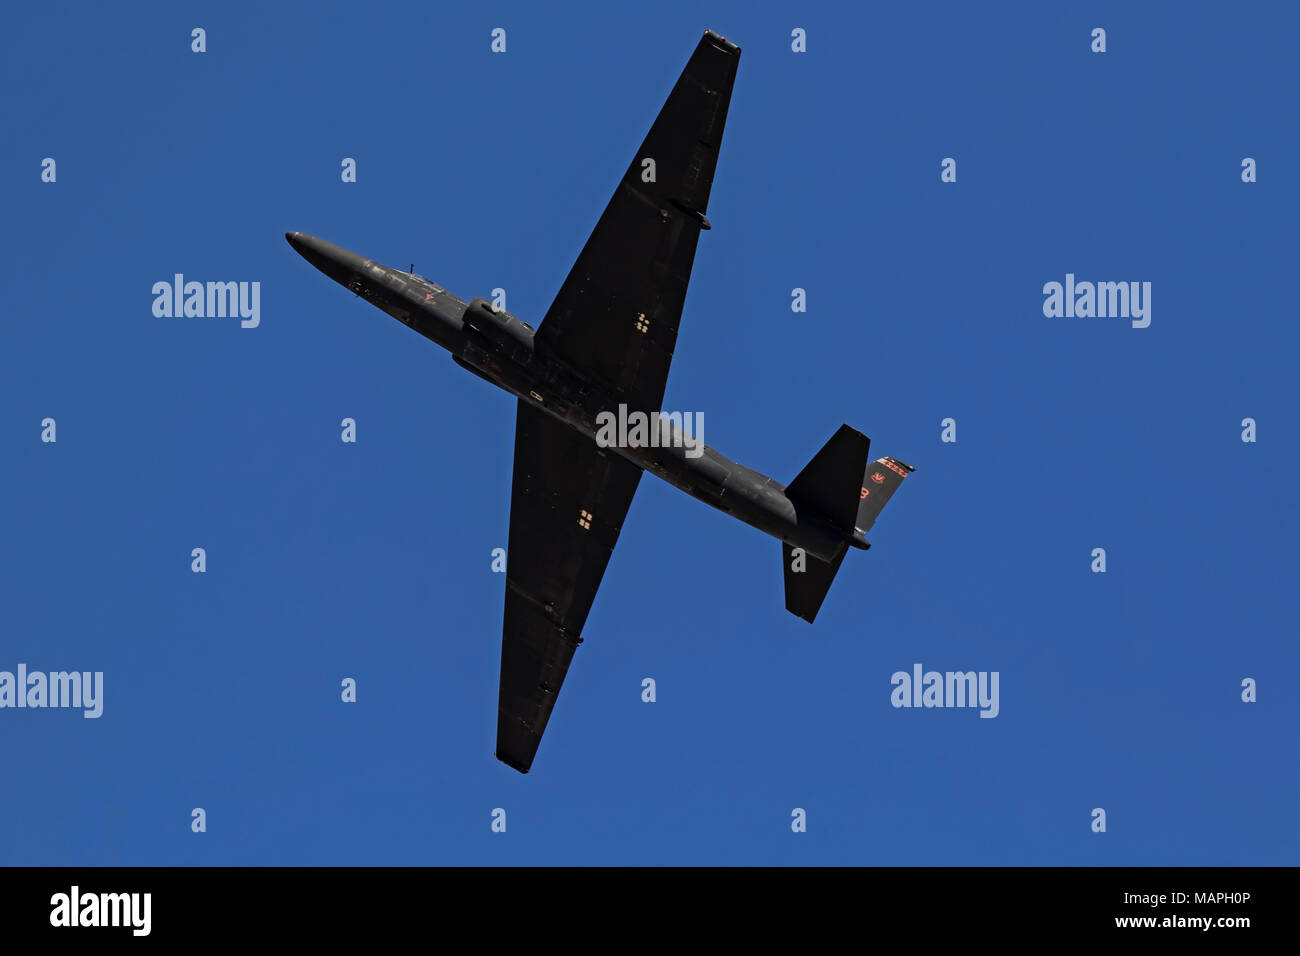 Airplane U2 Dragon Lady Cold War jet Stock Photo